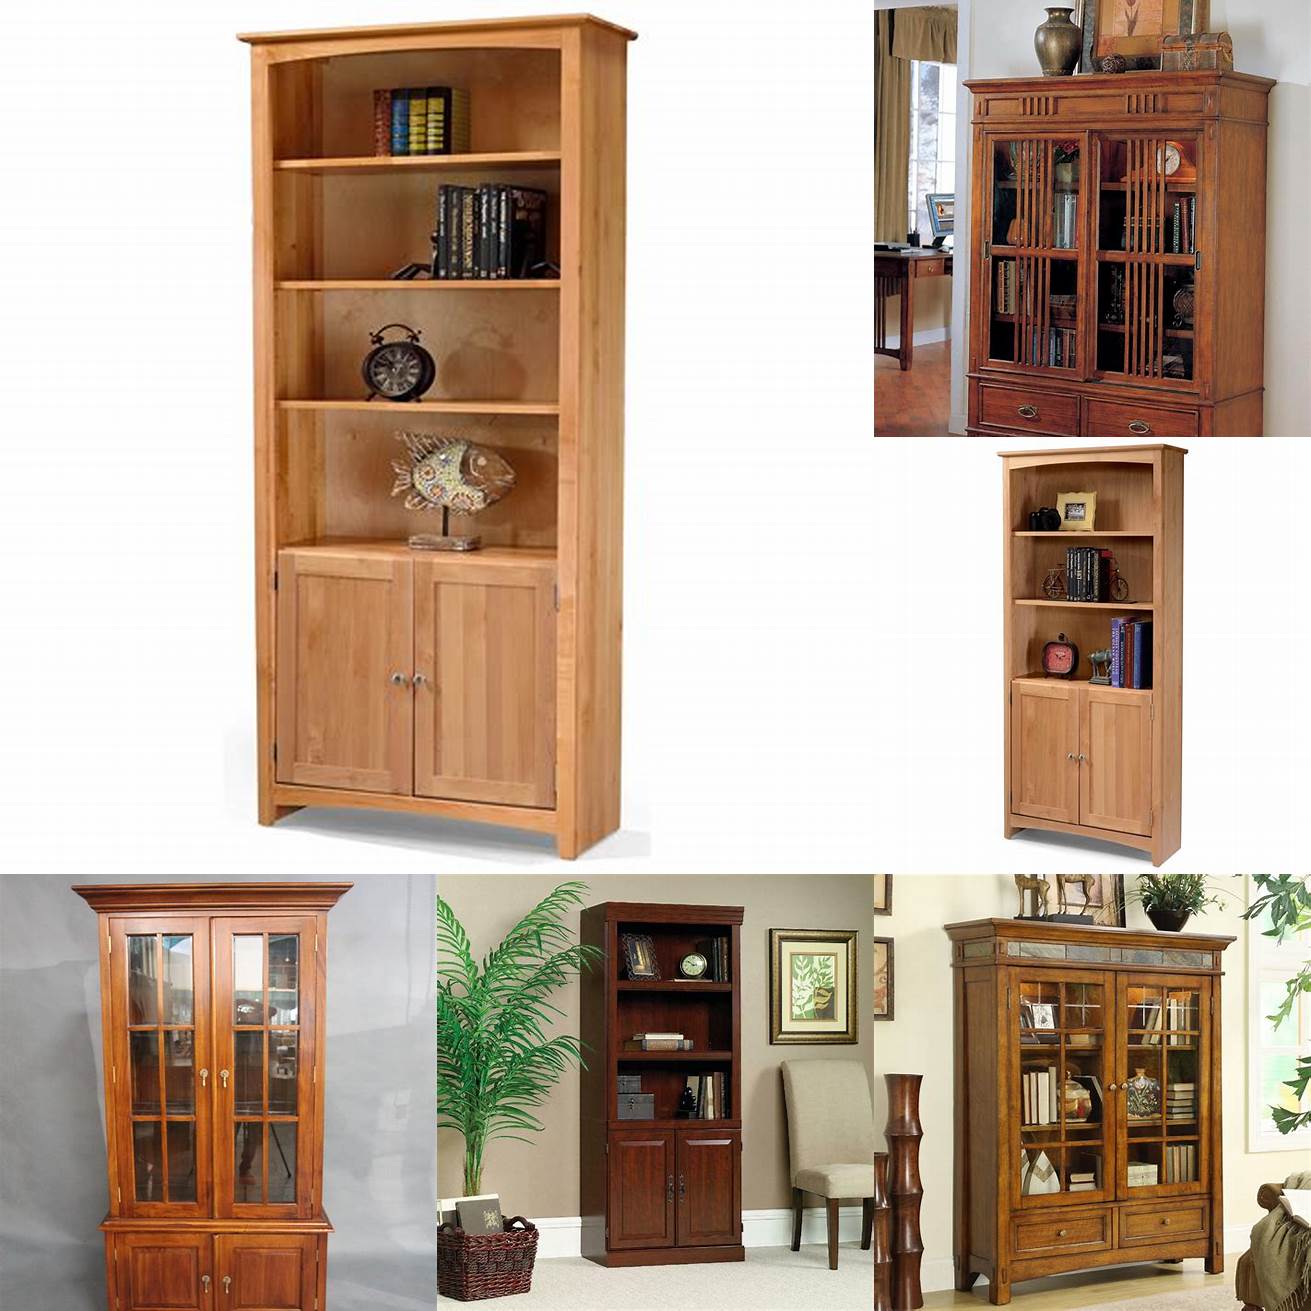 Traditional Teak Wood Bookshelf with Doors